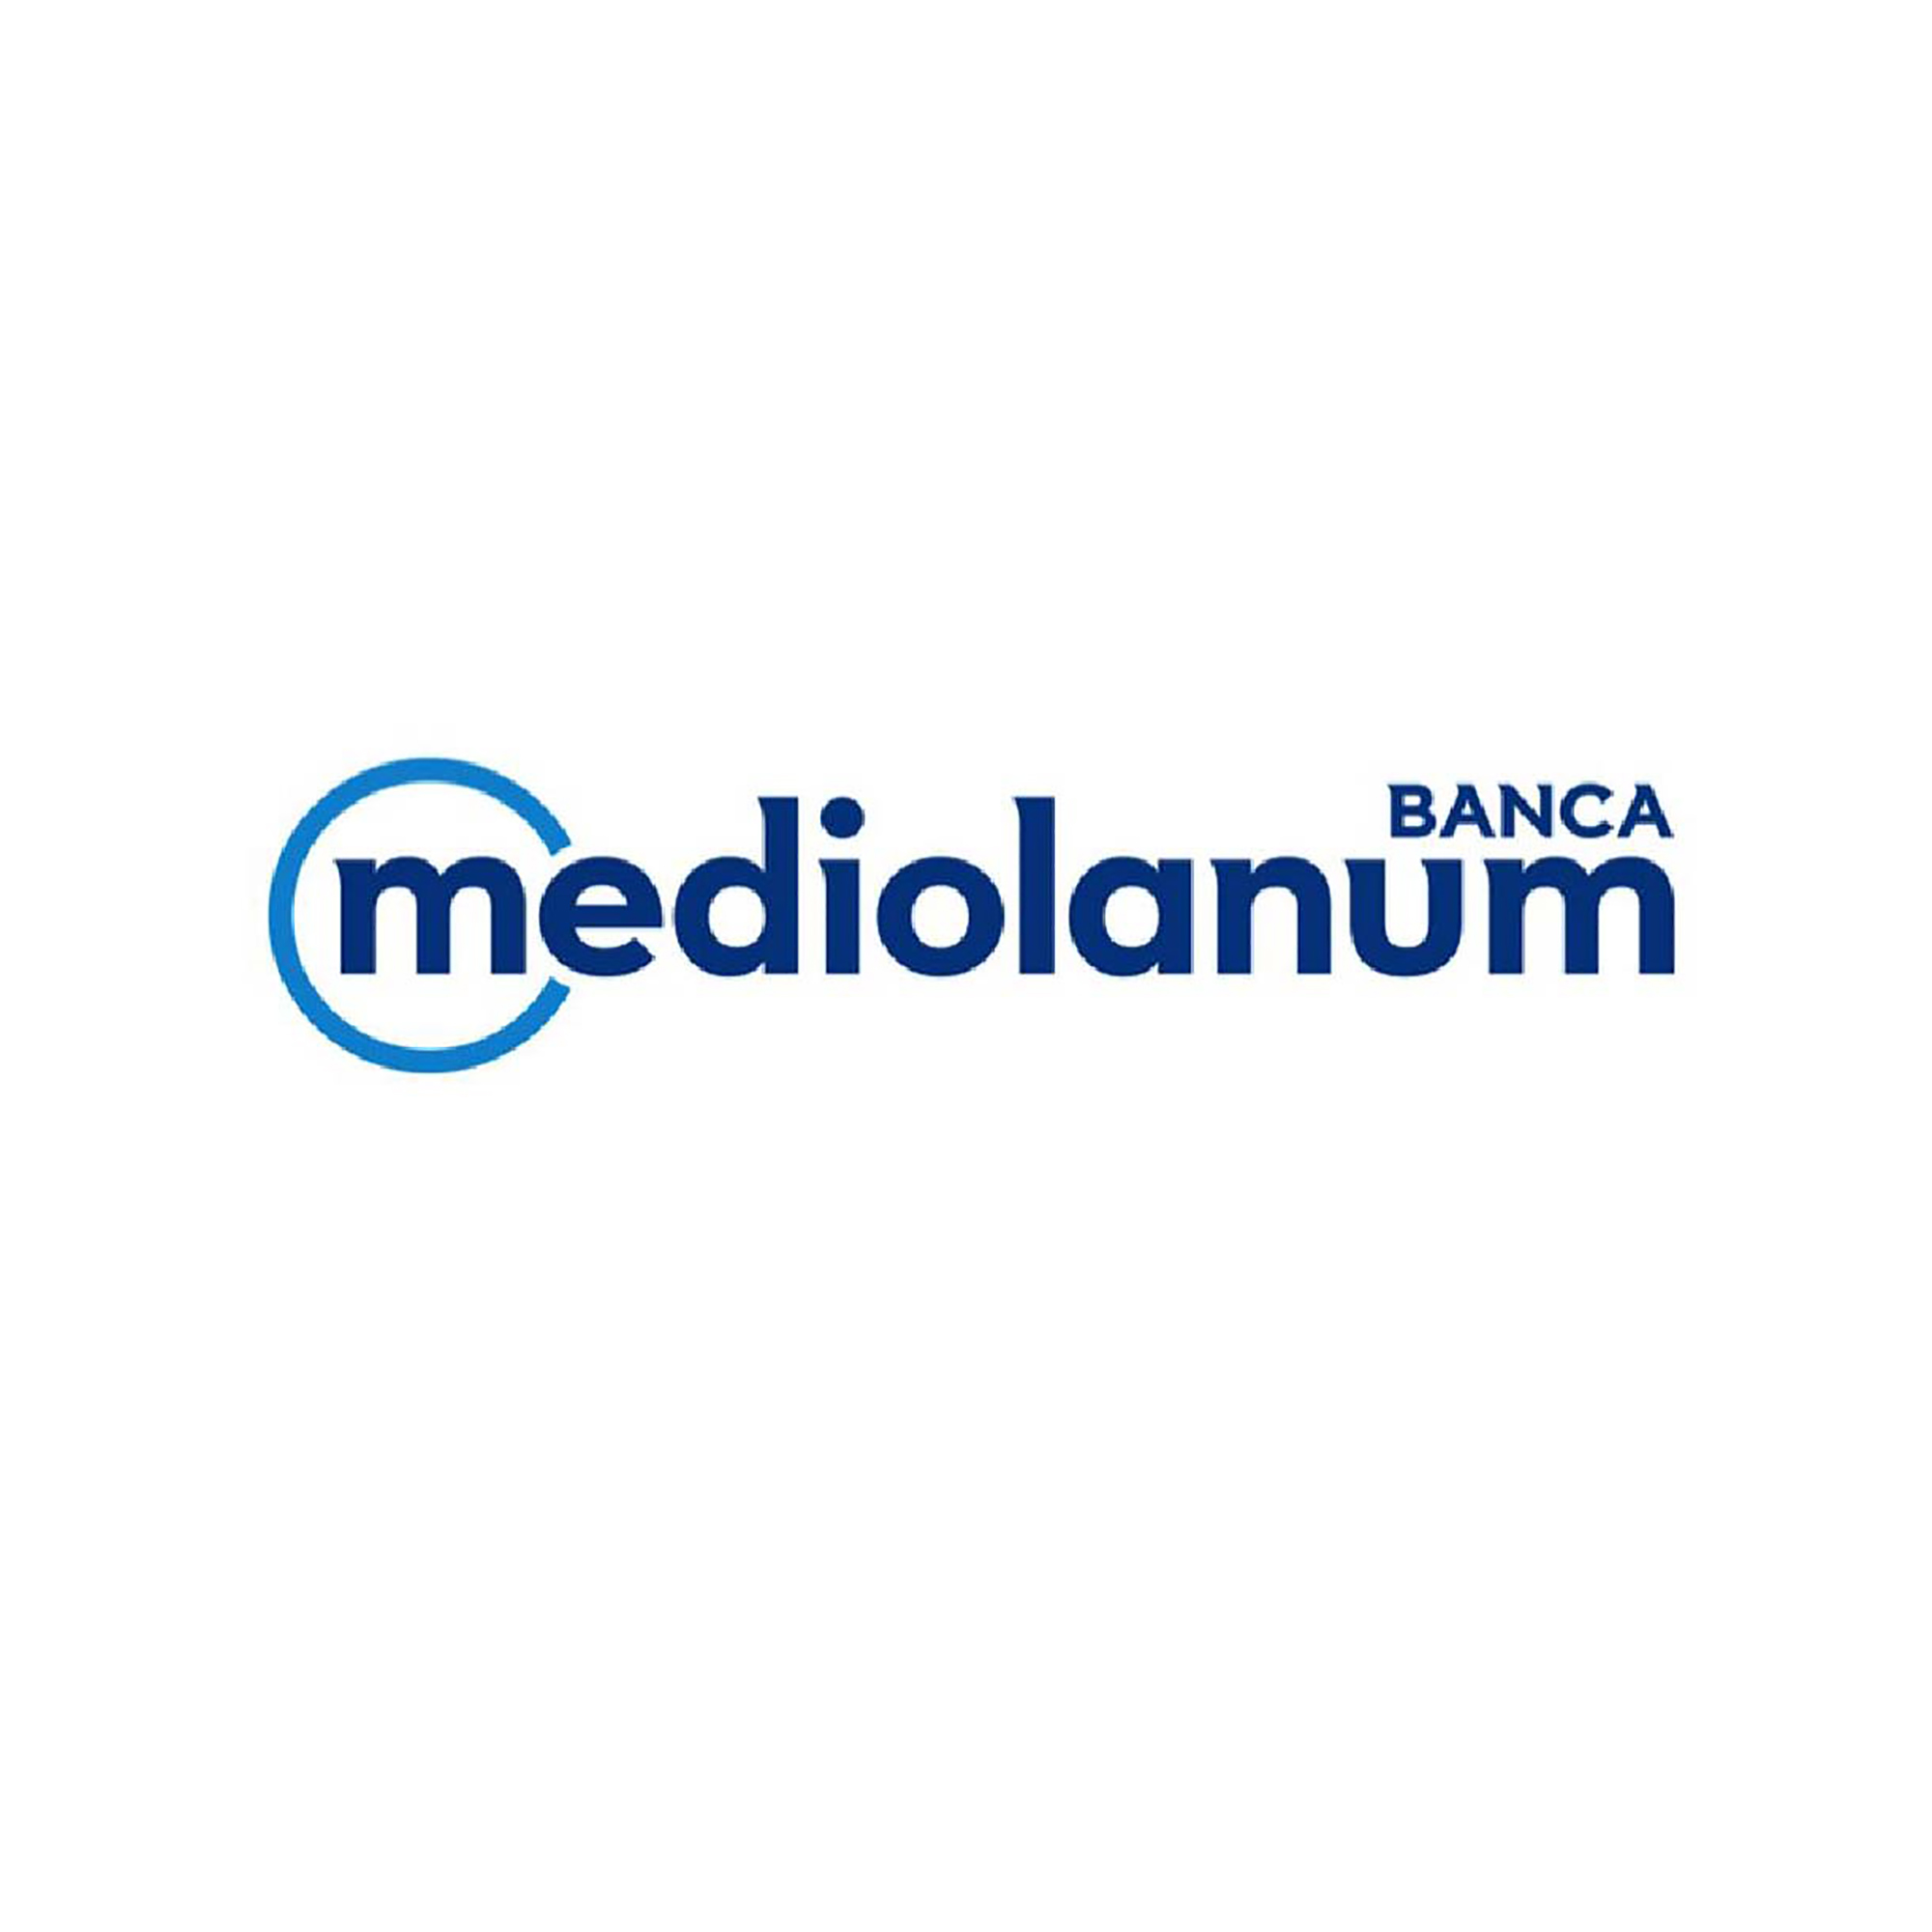 Banca Mediolanum - BIMEX Graduation Day 